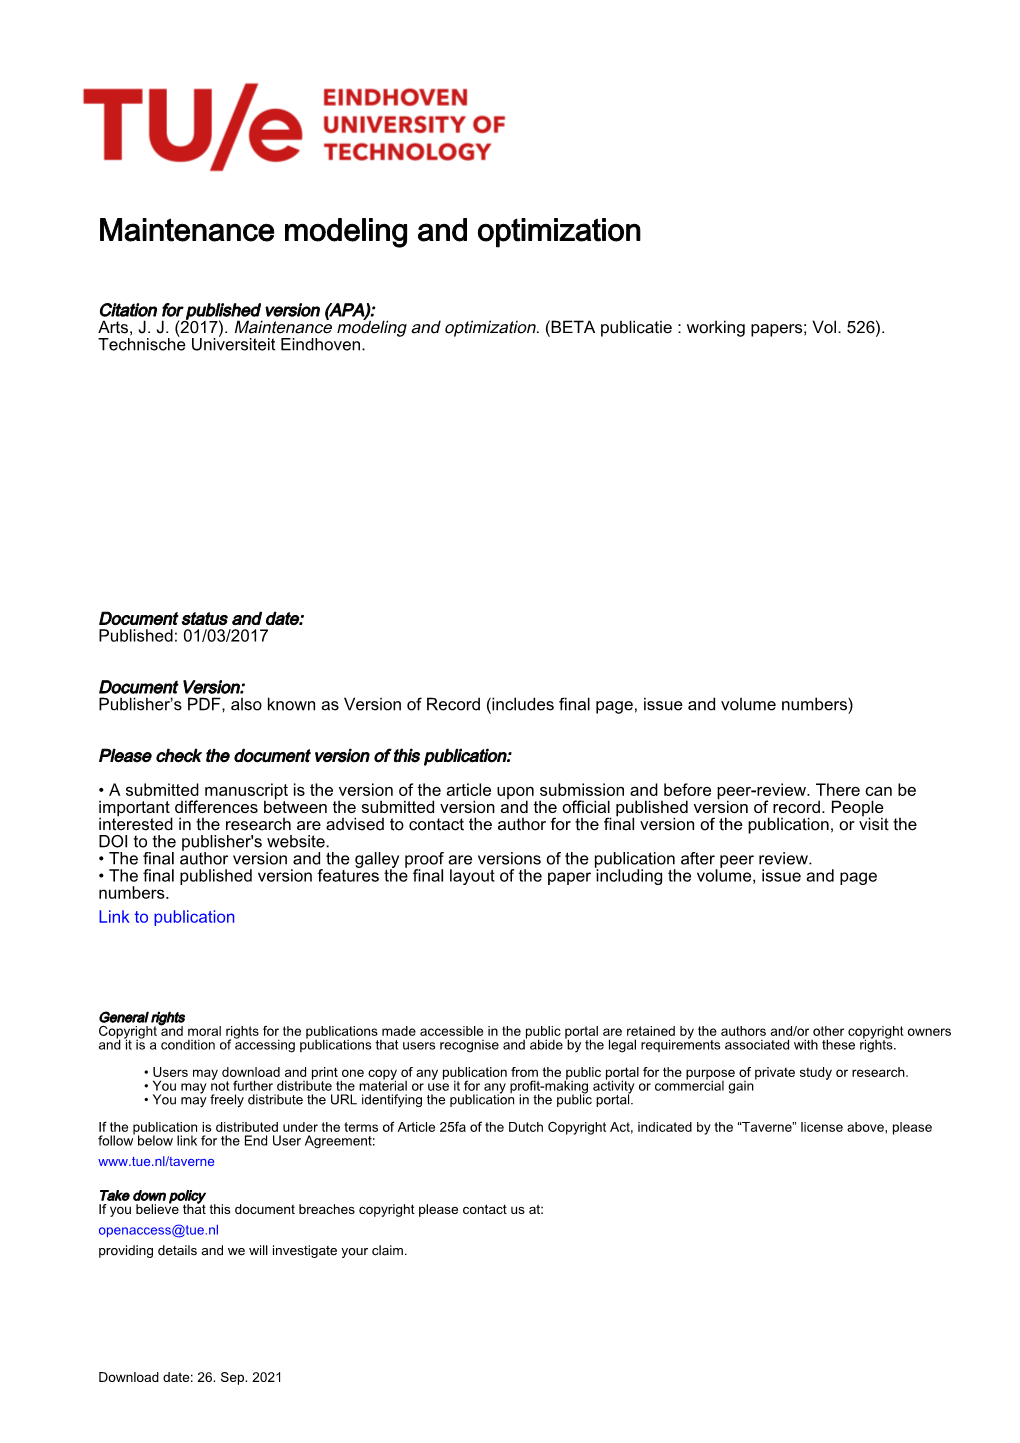 Maintenance Modeling and Optimization